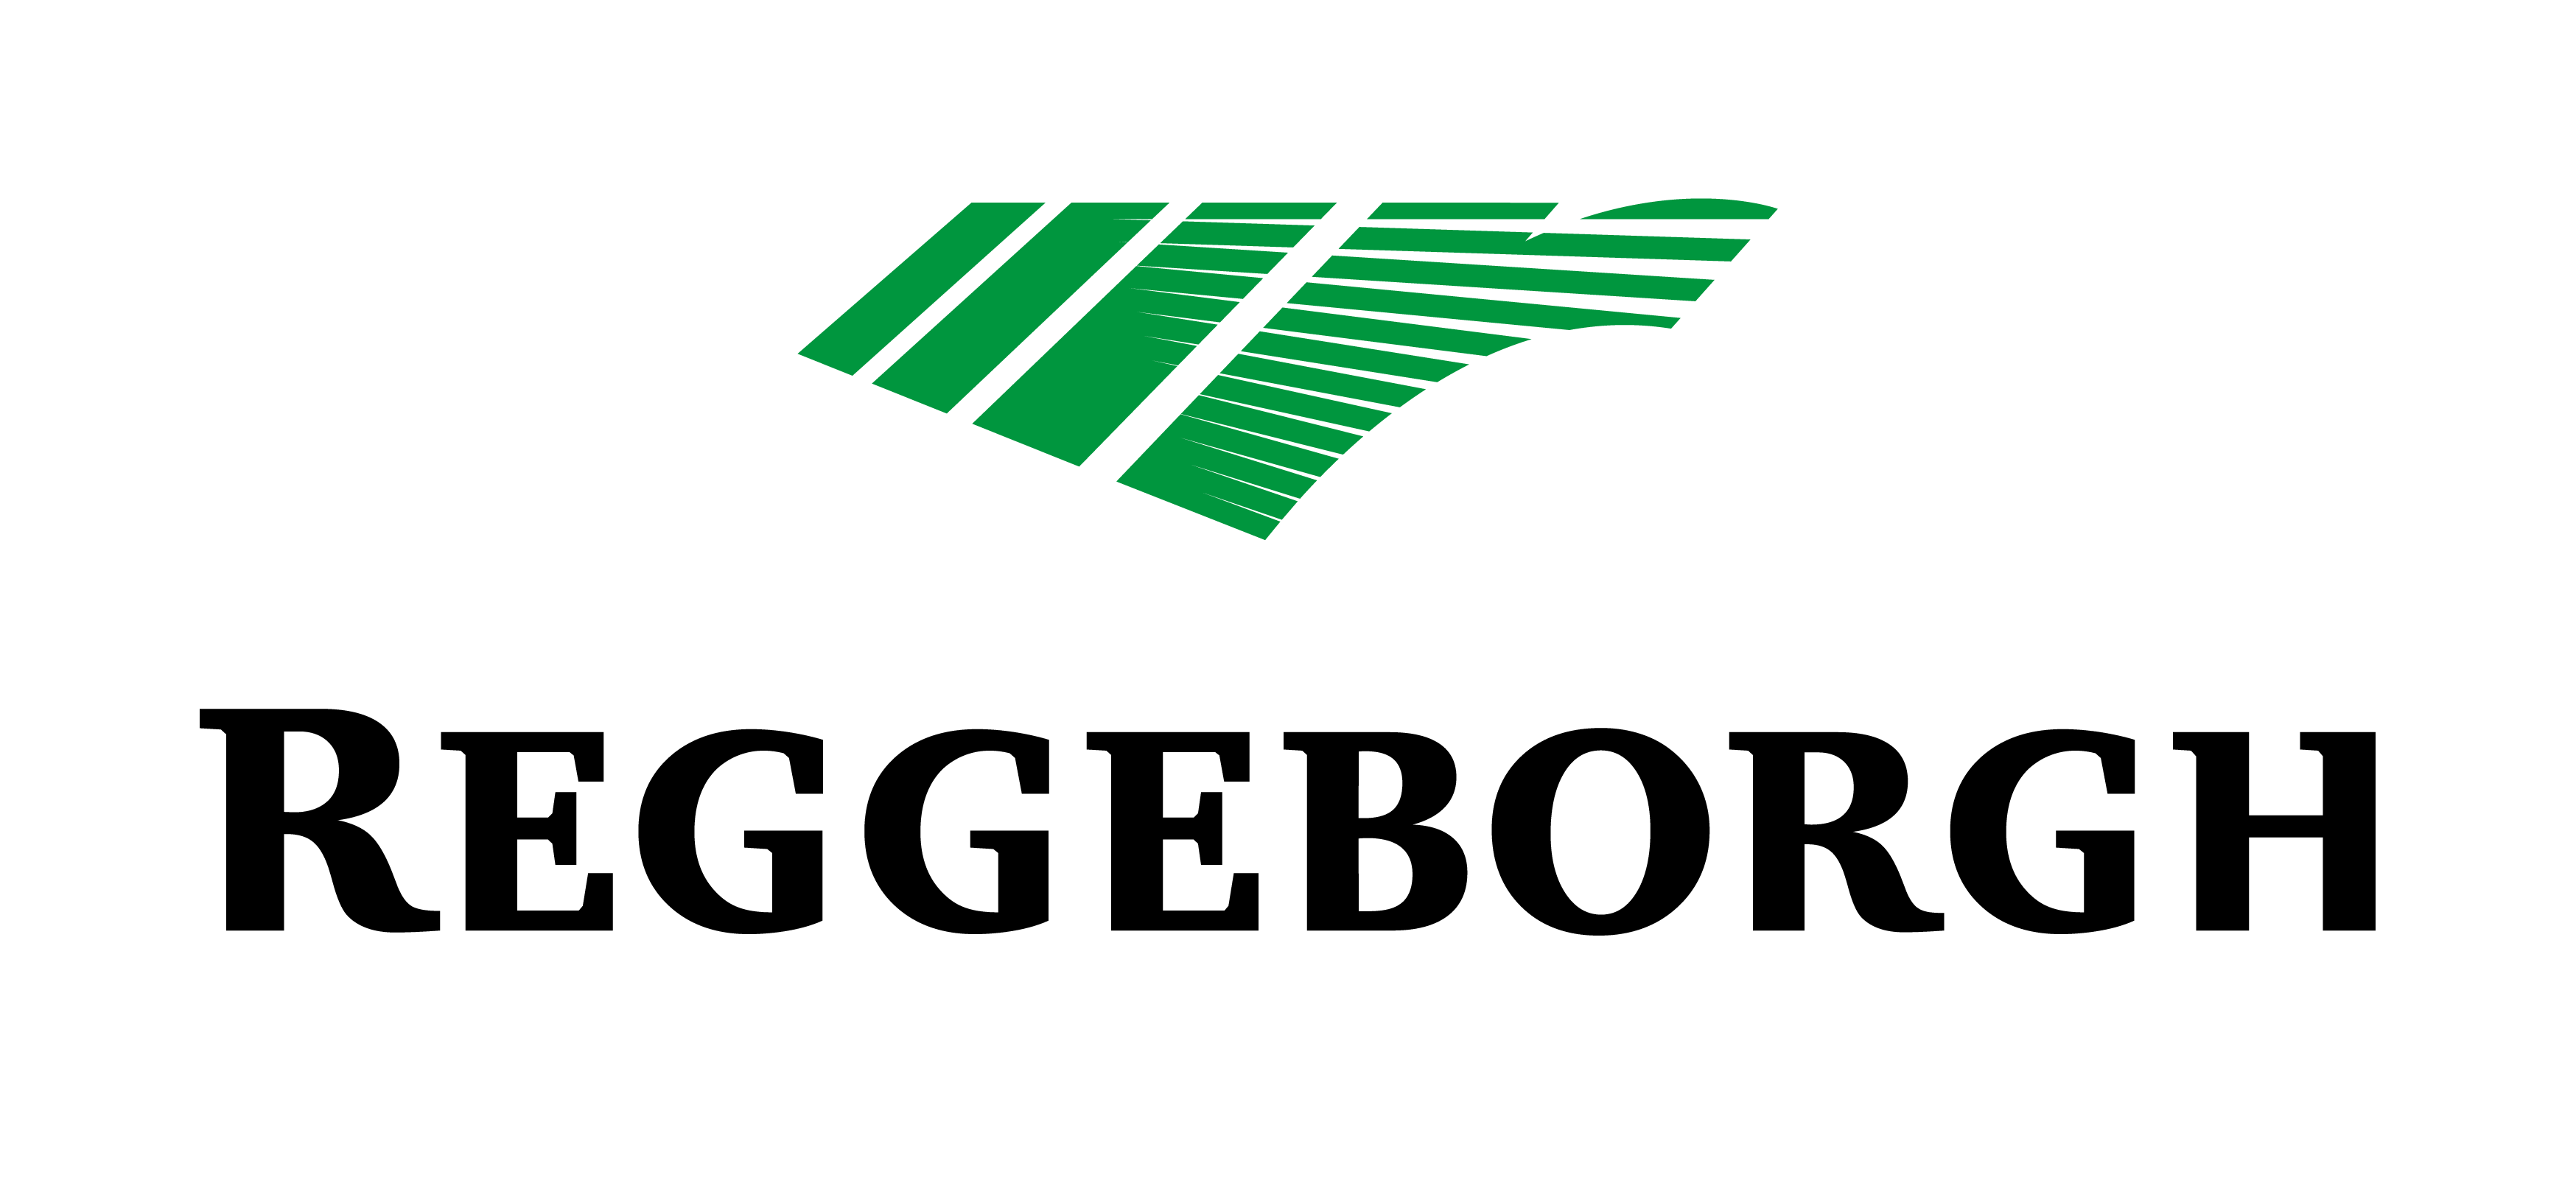 Reggeborgh Foundation logo